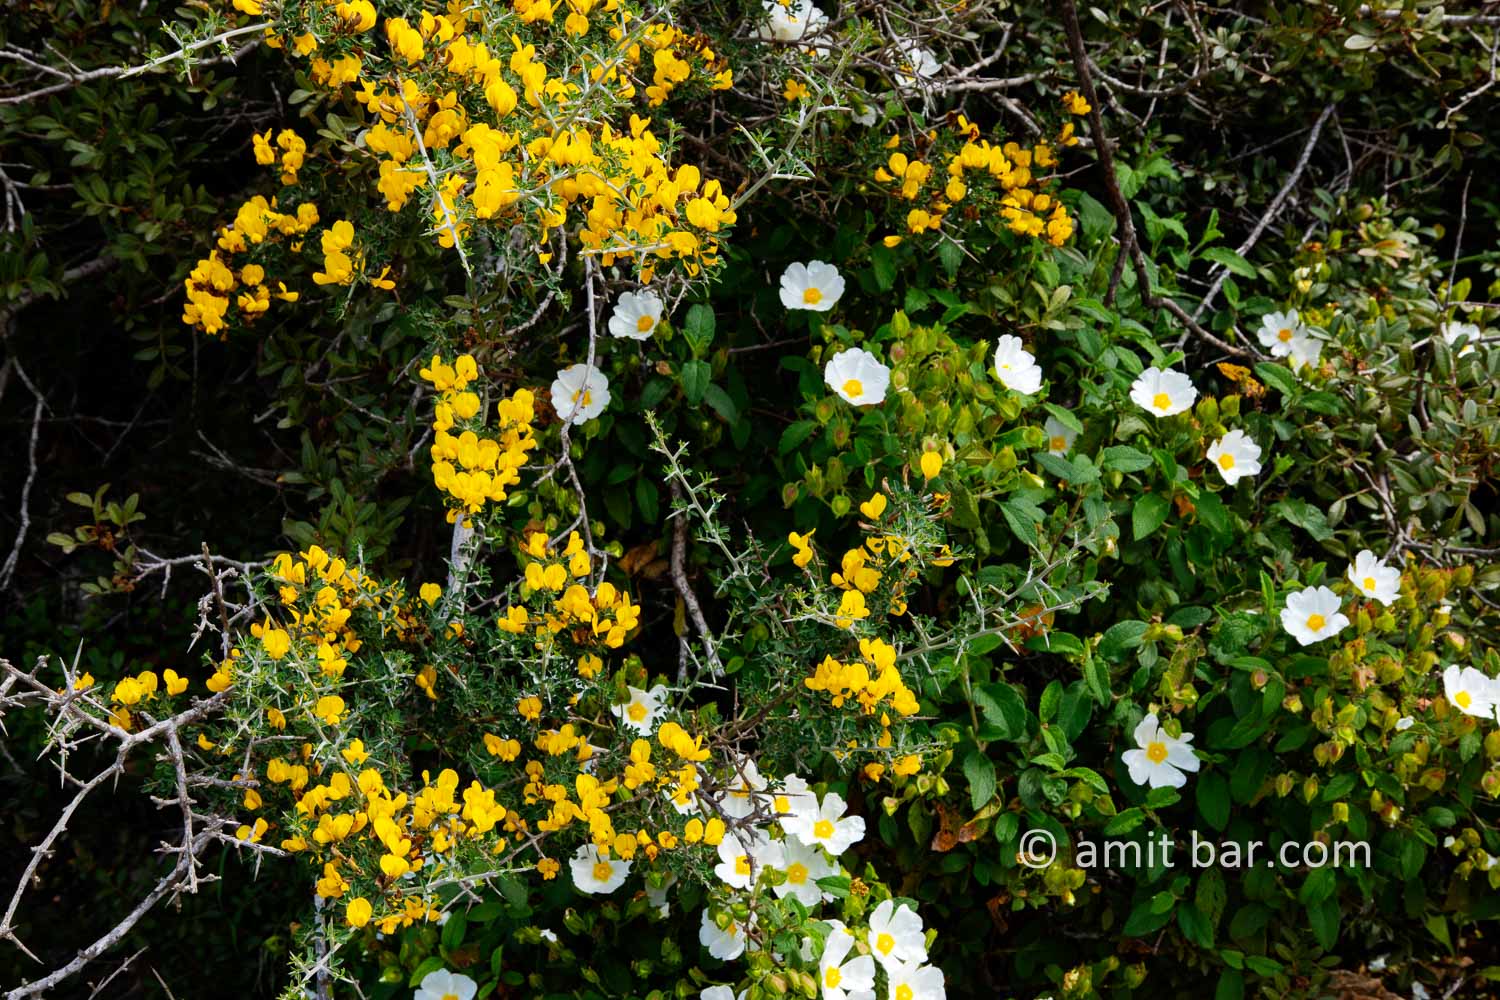 Carmel wild flowers IV: wild flowers on mountain Carmel, Israel in the spring time